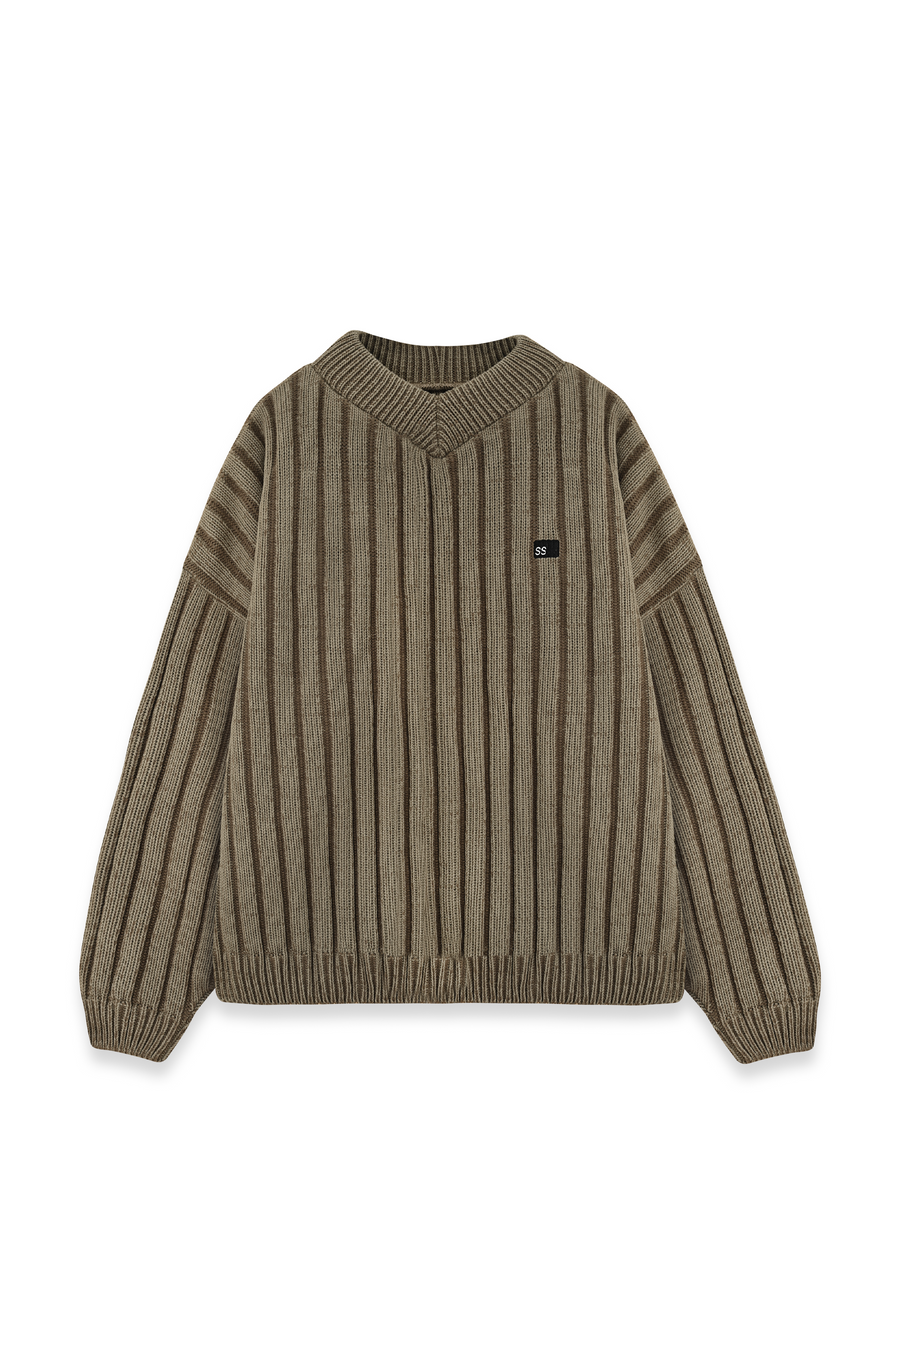 Papi Knit Sweater